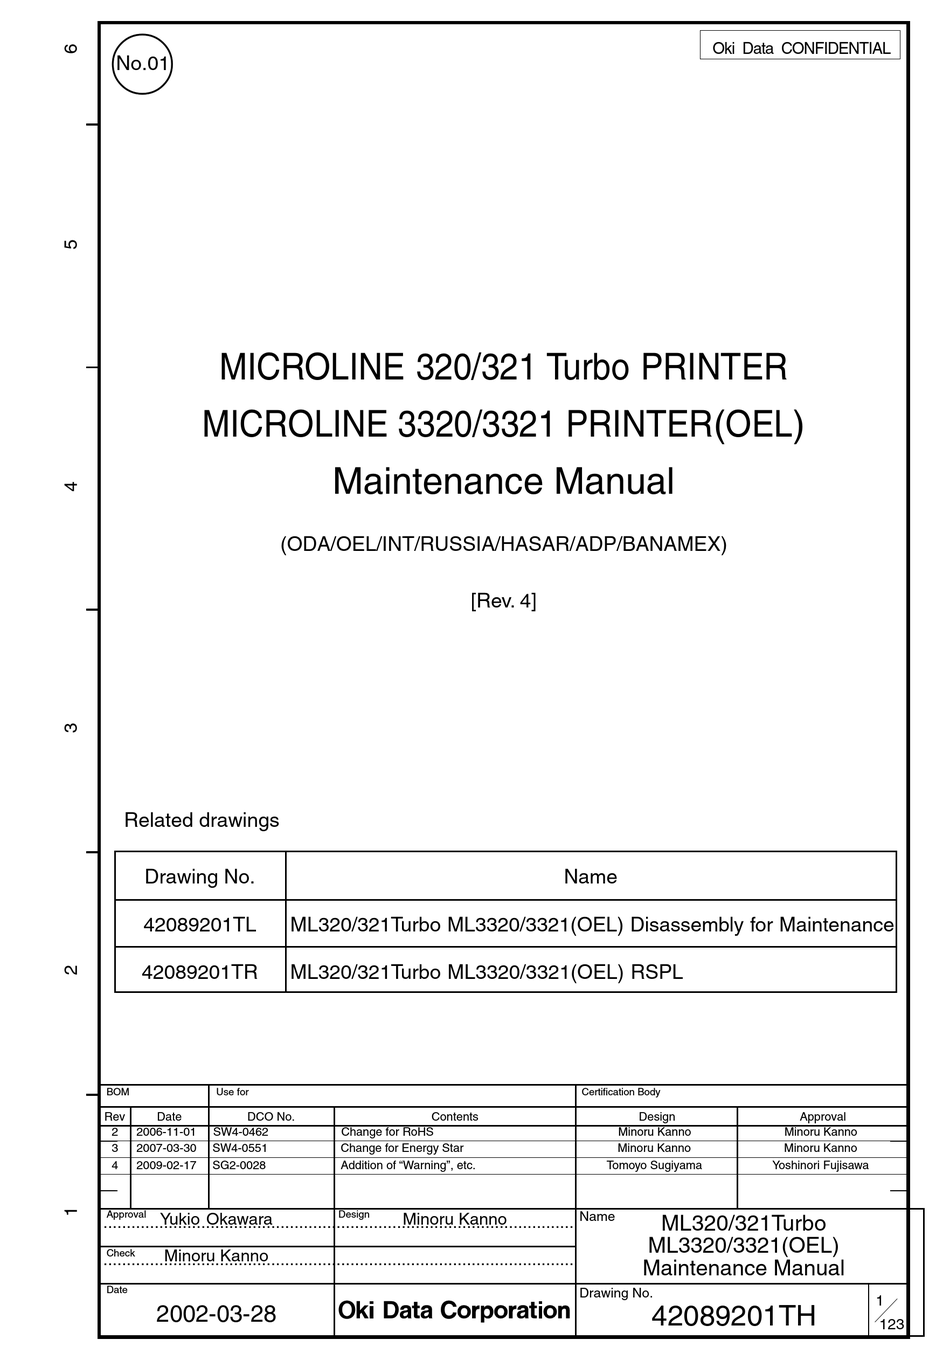 printhead for okidata microline 320 turbo